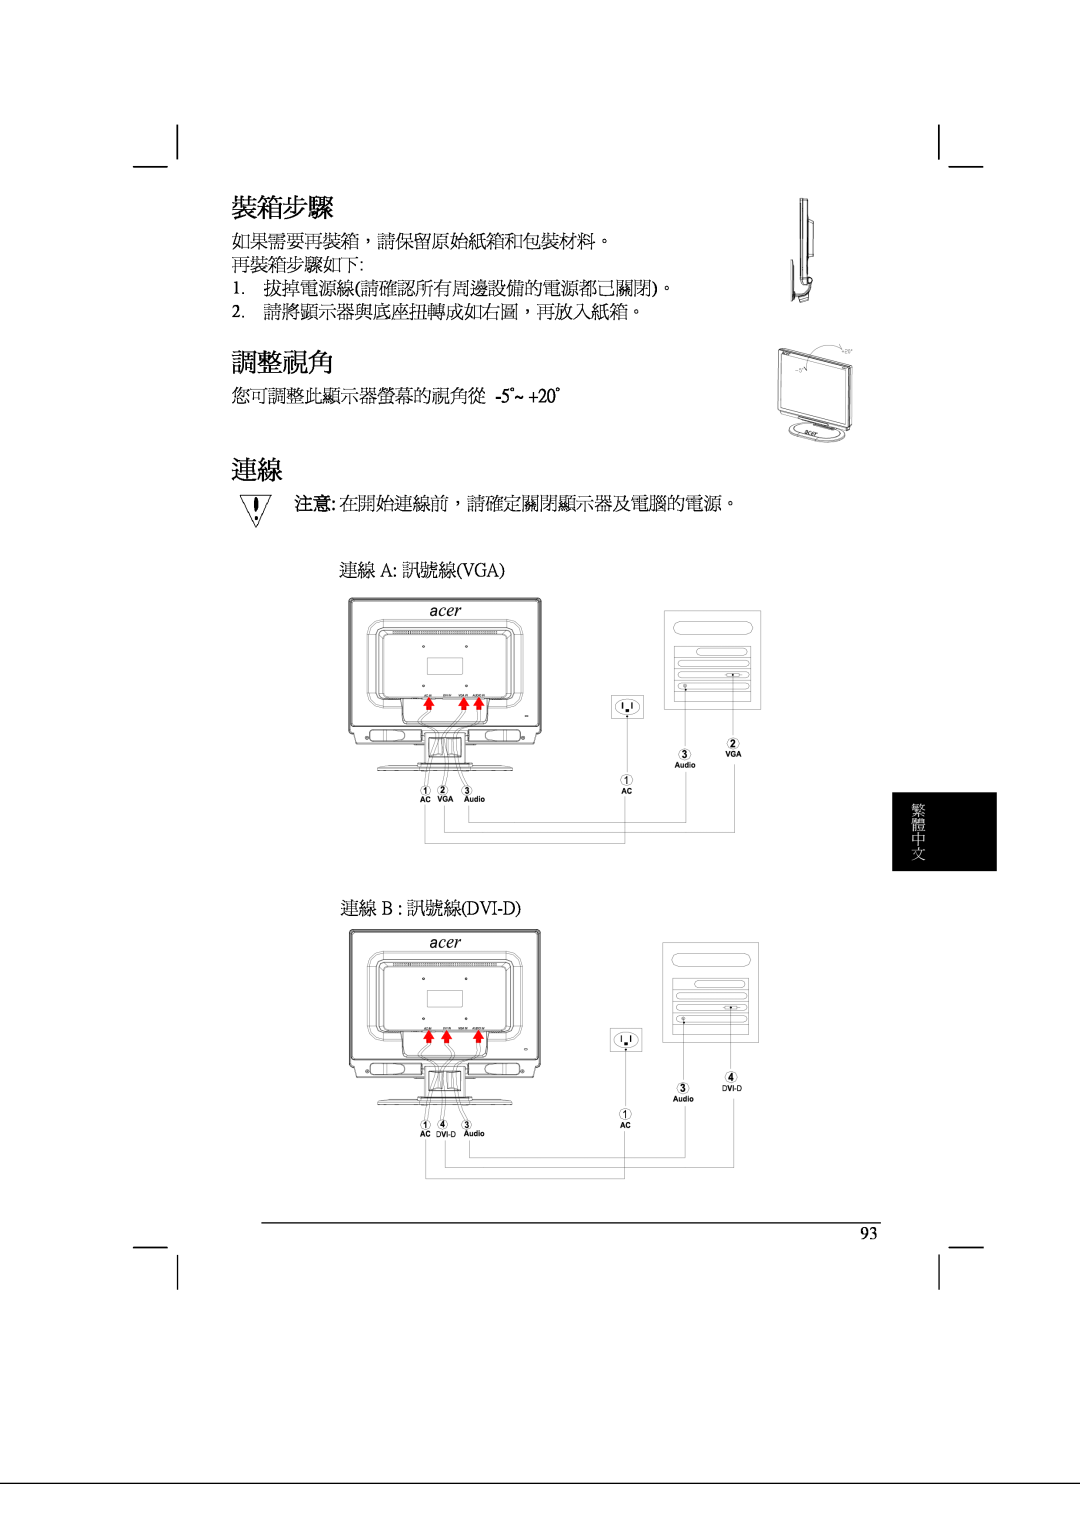 Acer AL2021 manual 裝箱步驟, 調整視角, 連線 A 訊號線vga, 連線 B 訊號線dvi-D, 繁 體 中 文 